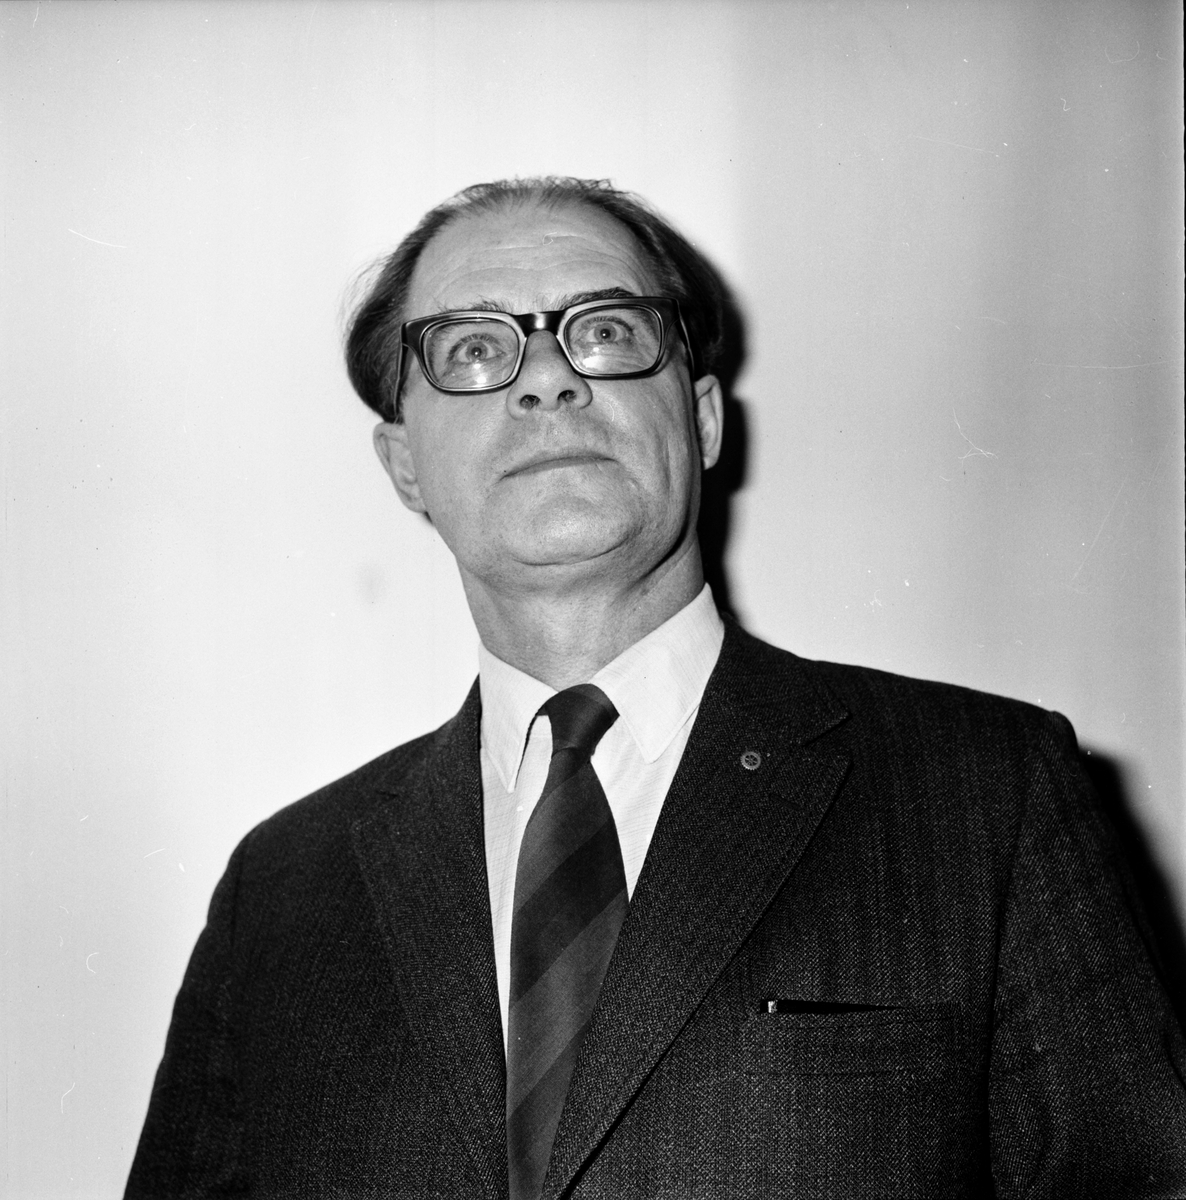 Nytorp,
Ny rektor Anders Strömberg,
April 1972
